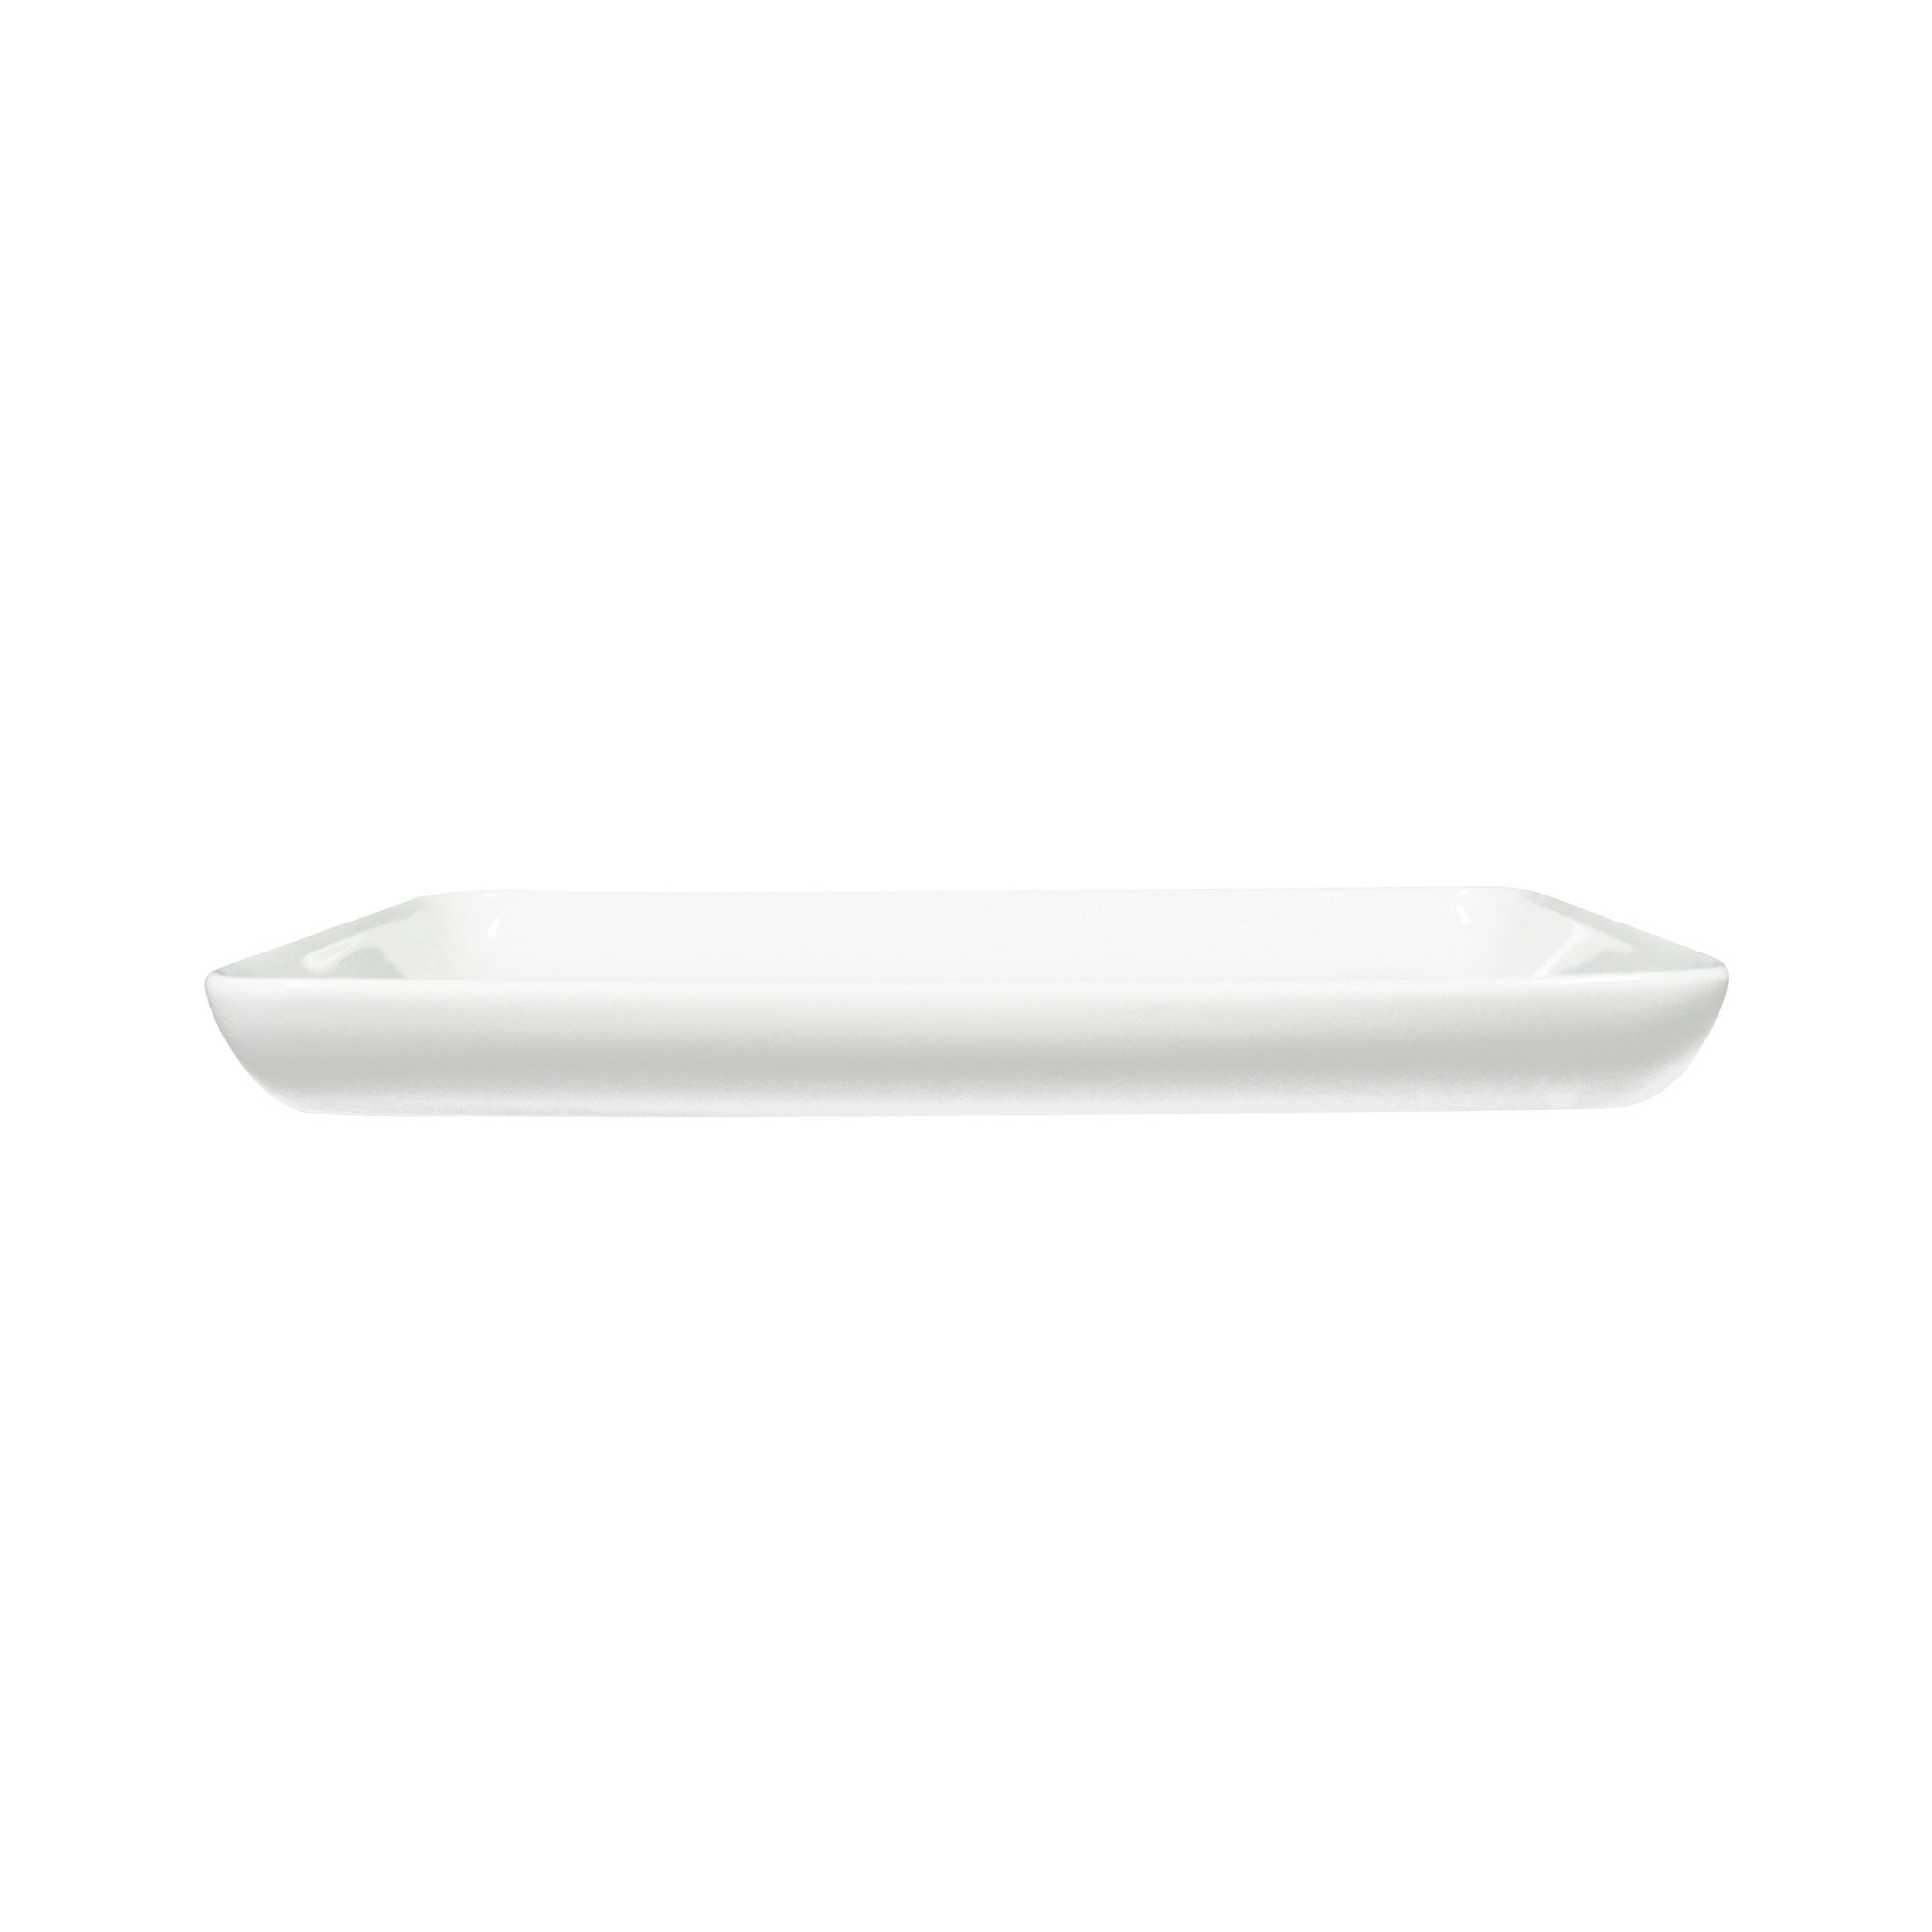 Noritake Marc Newson Serving Platter 24.5cm White Image 1